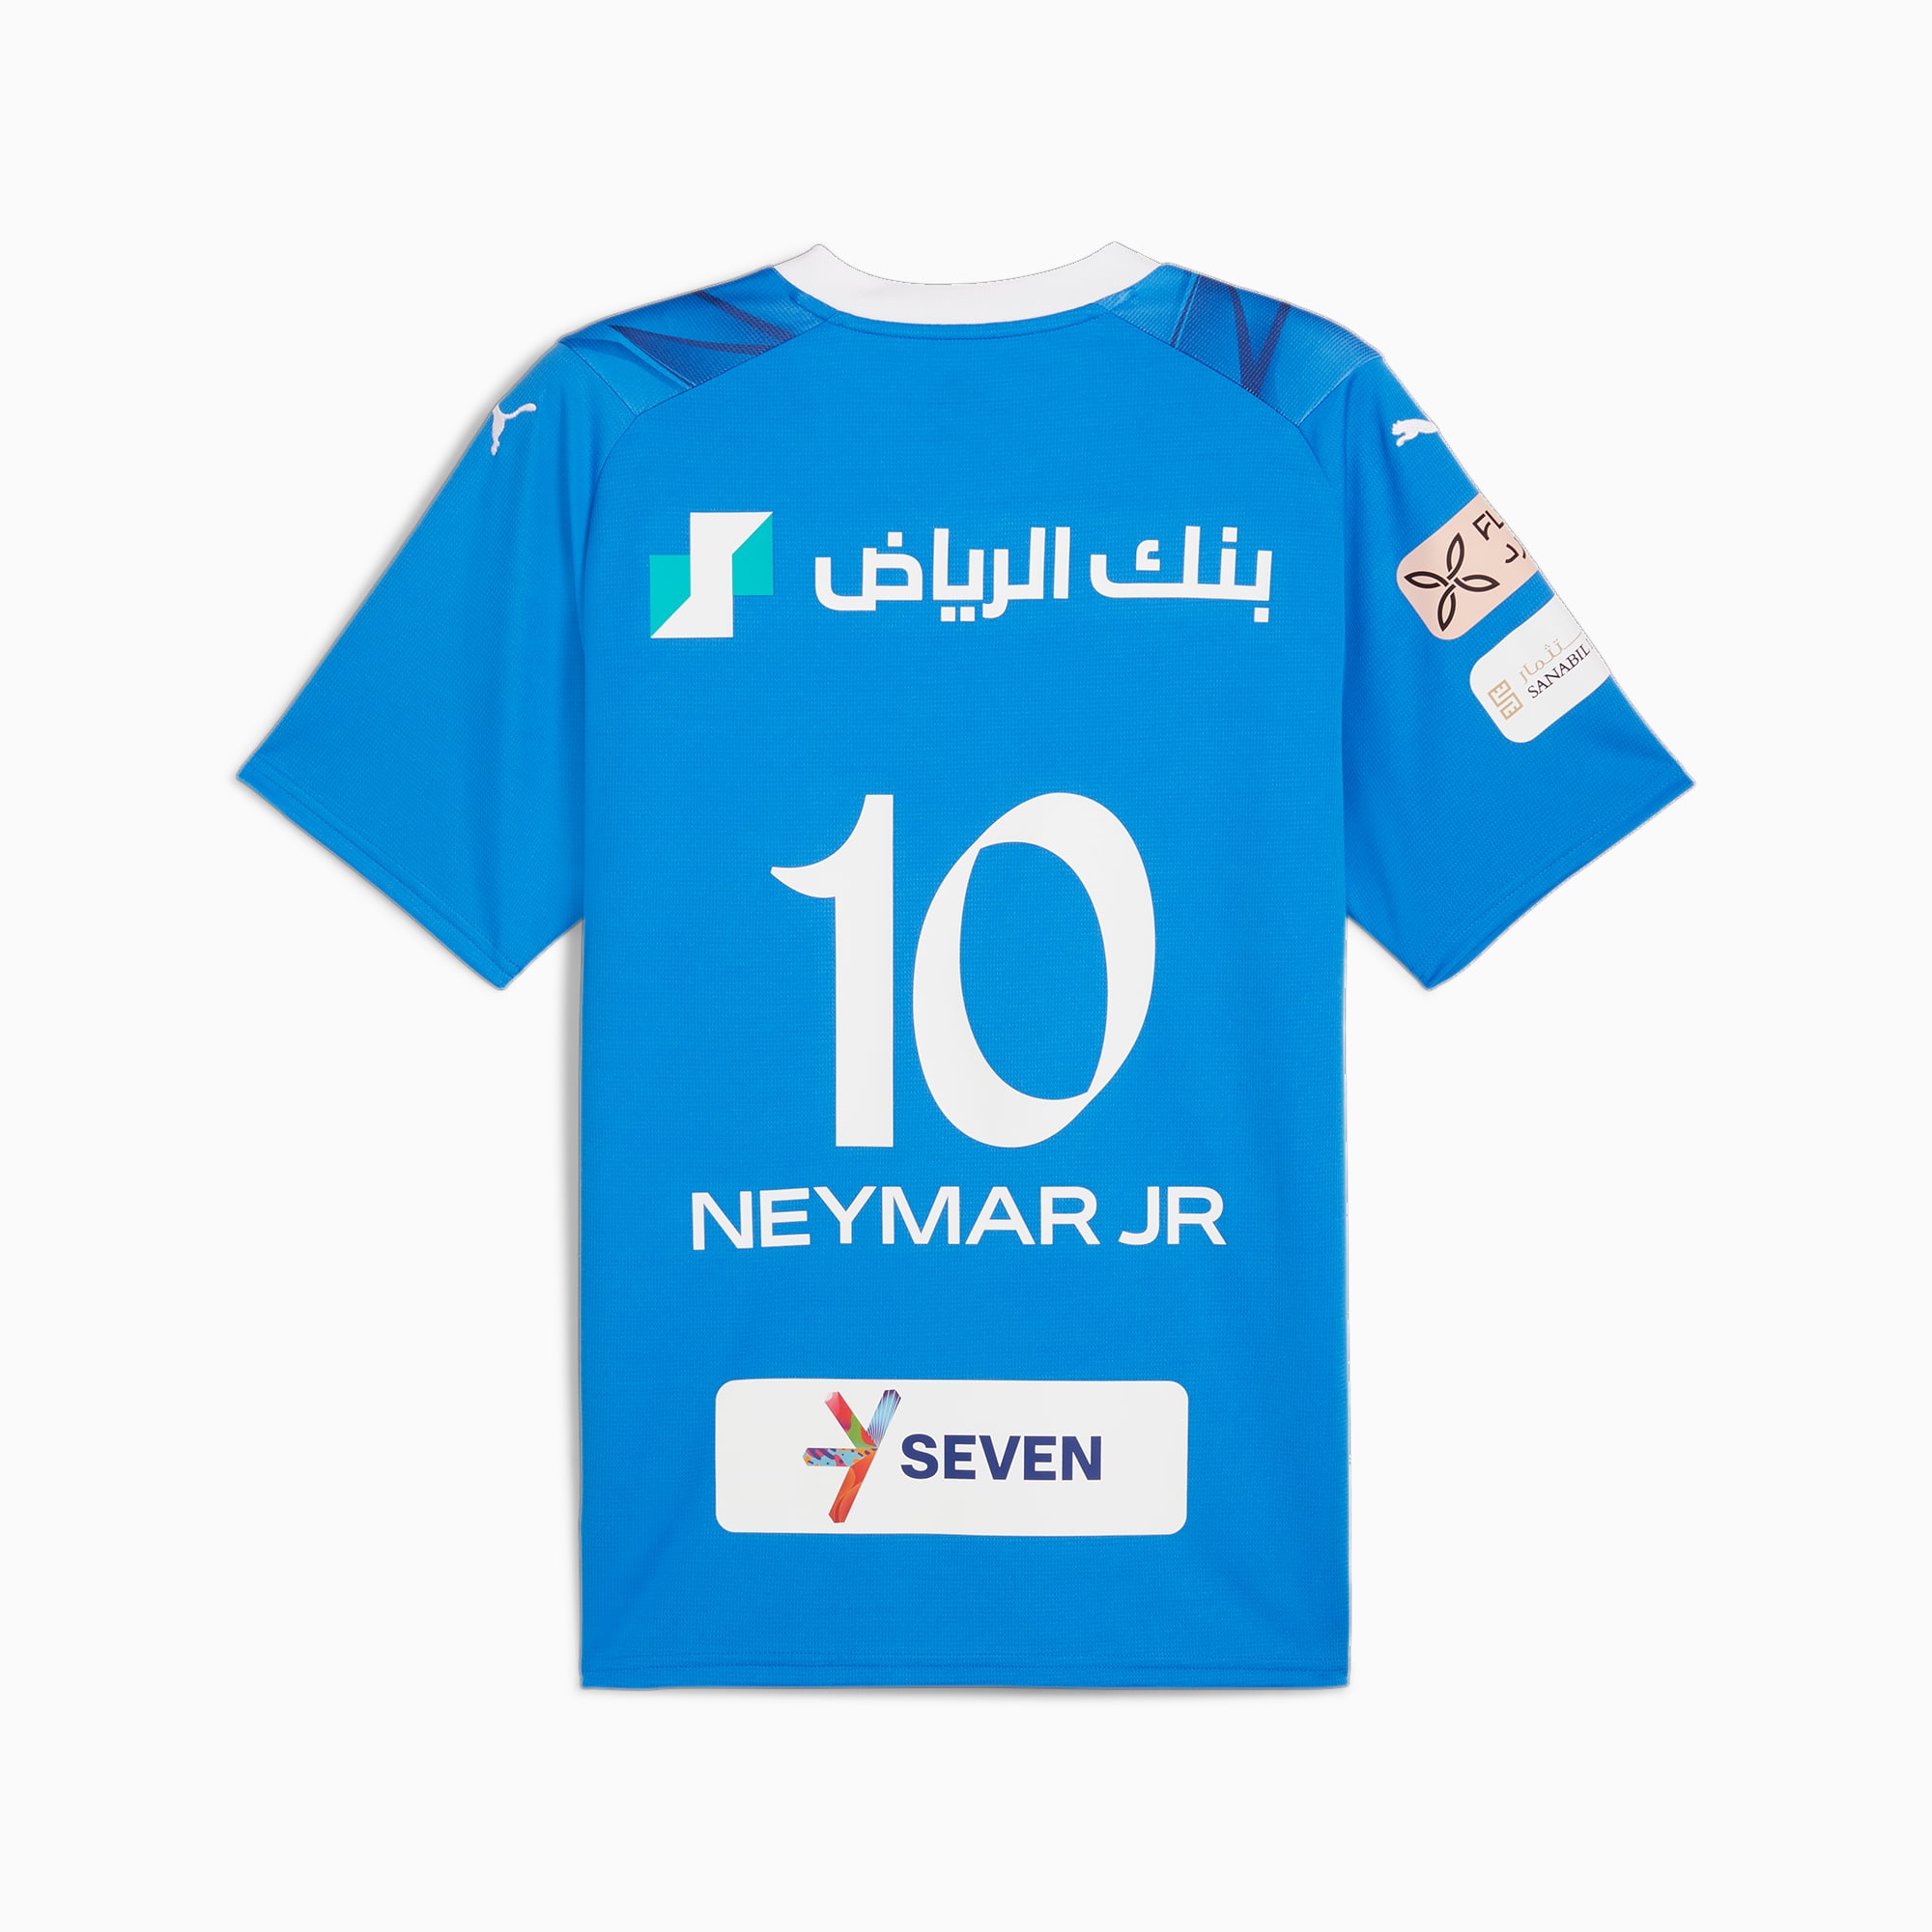 PUMA Al Hilal Men's Football Home Neymar Jr Replica Jersey, Ignite Blue/White, Size XS, Clothing